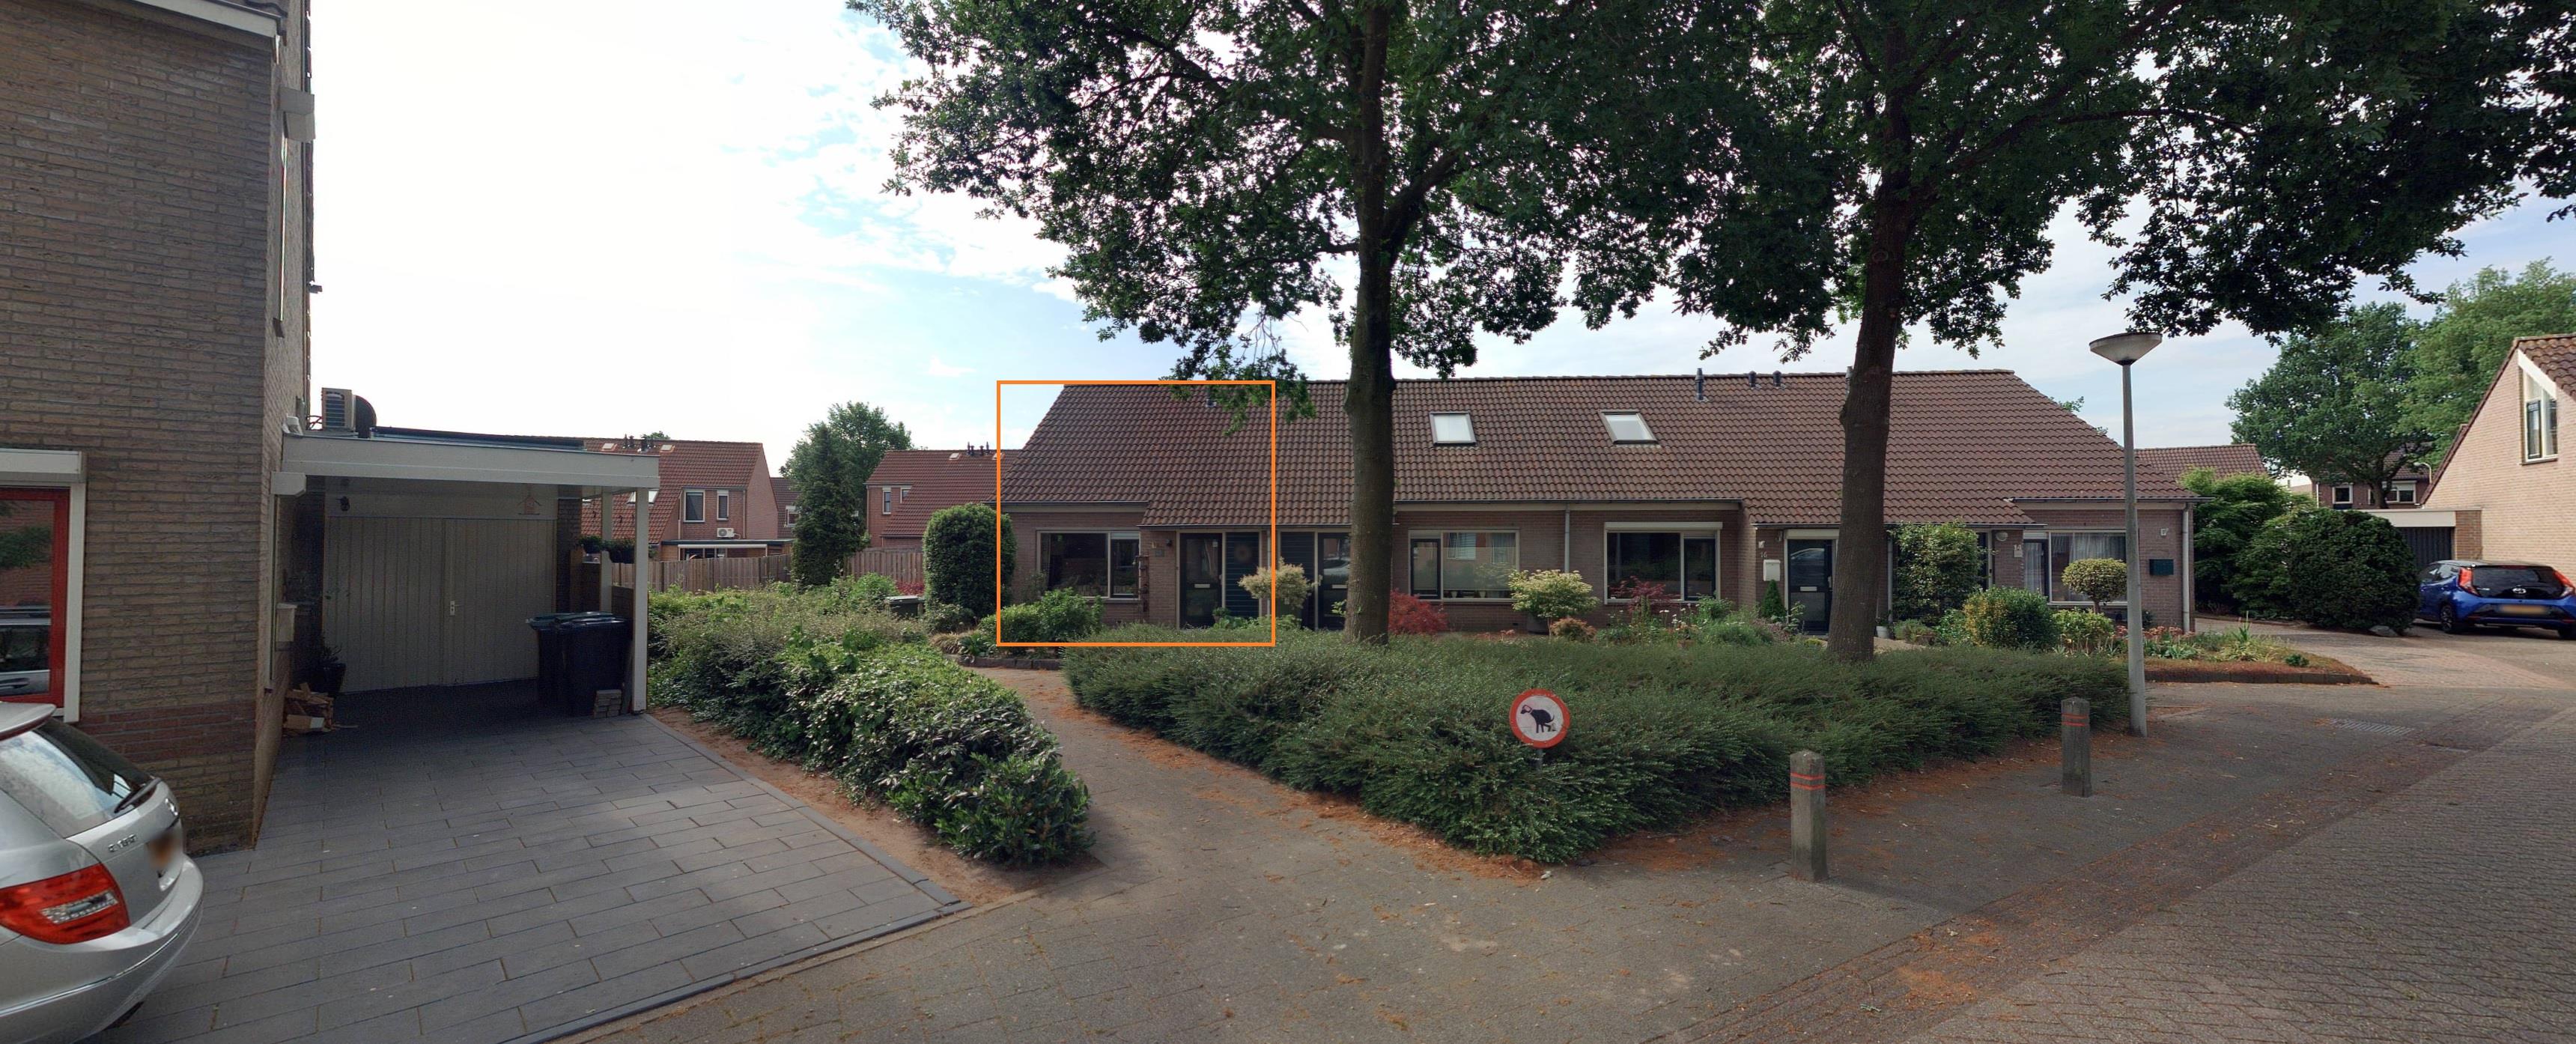 Frankenstraat 20, 7041 VD 's-Heerenberg, Nederland